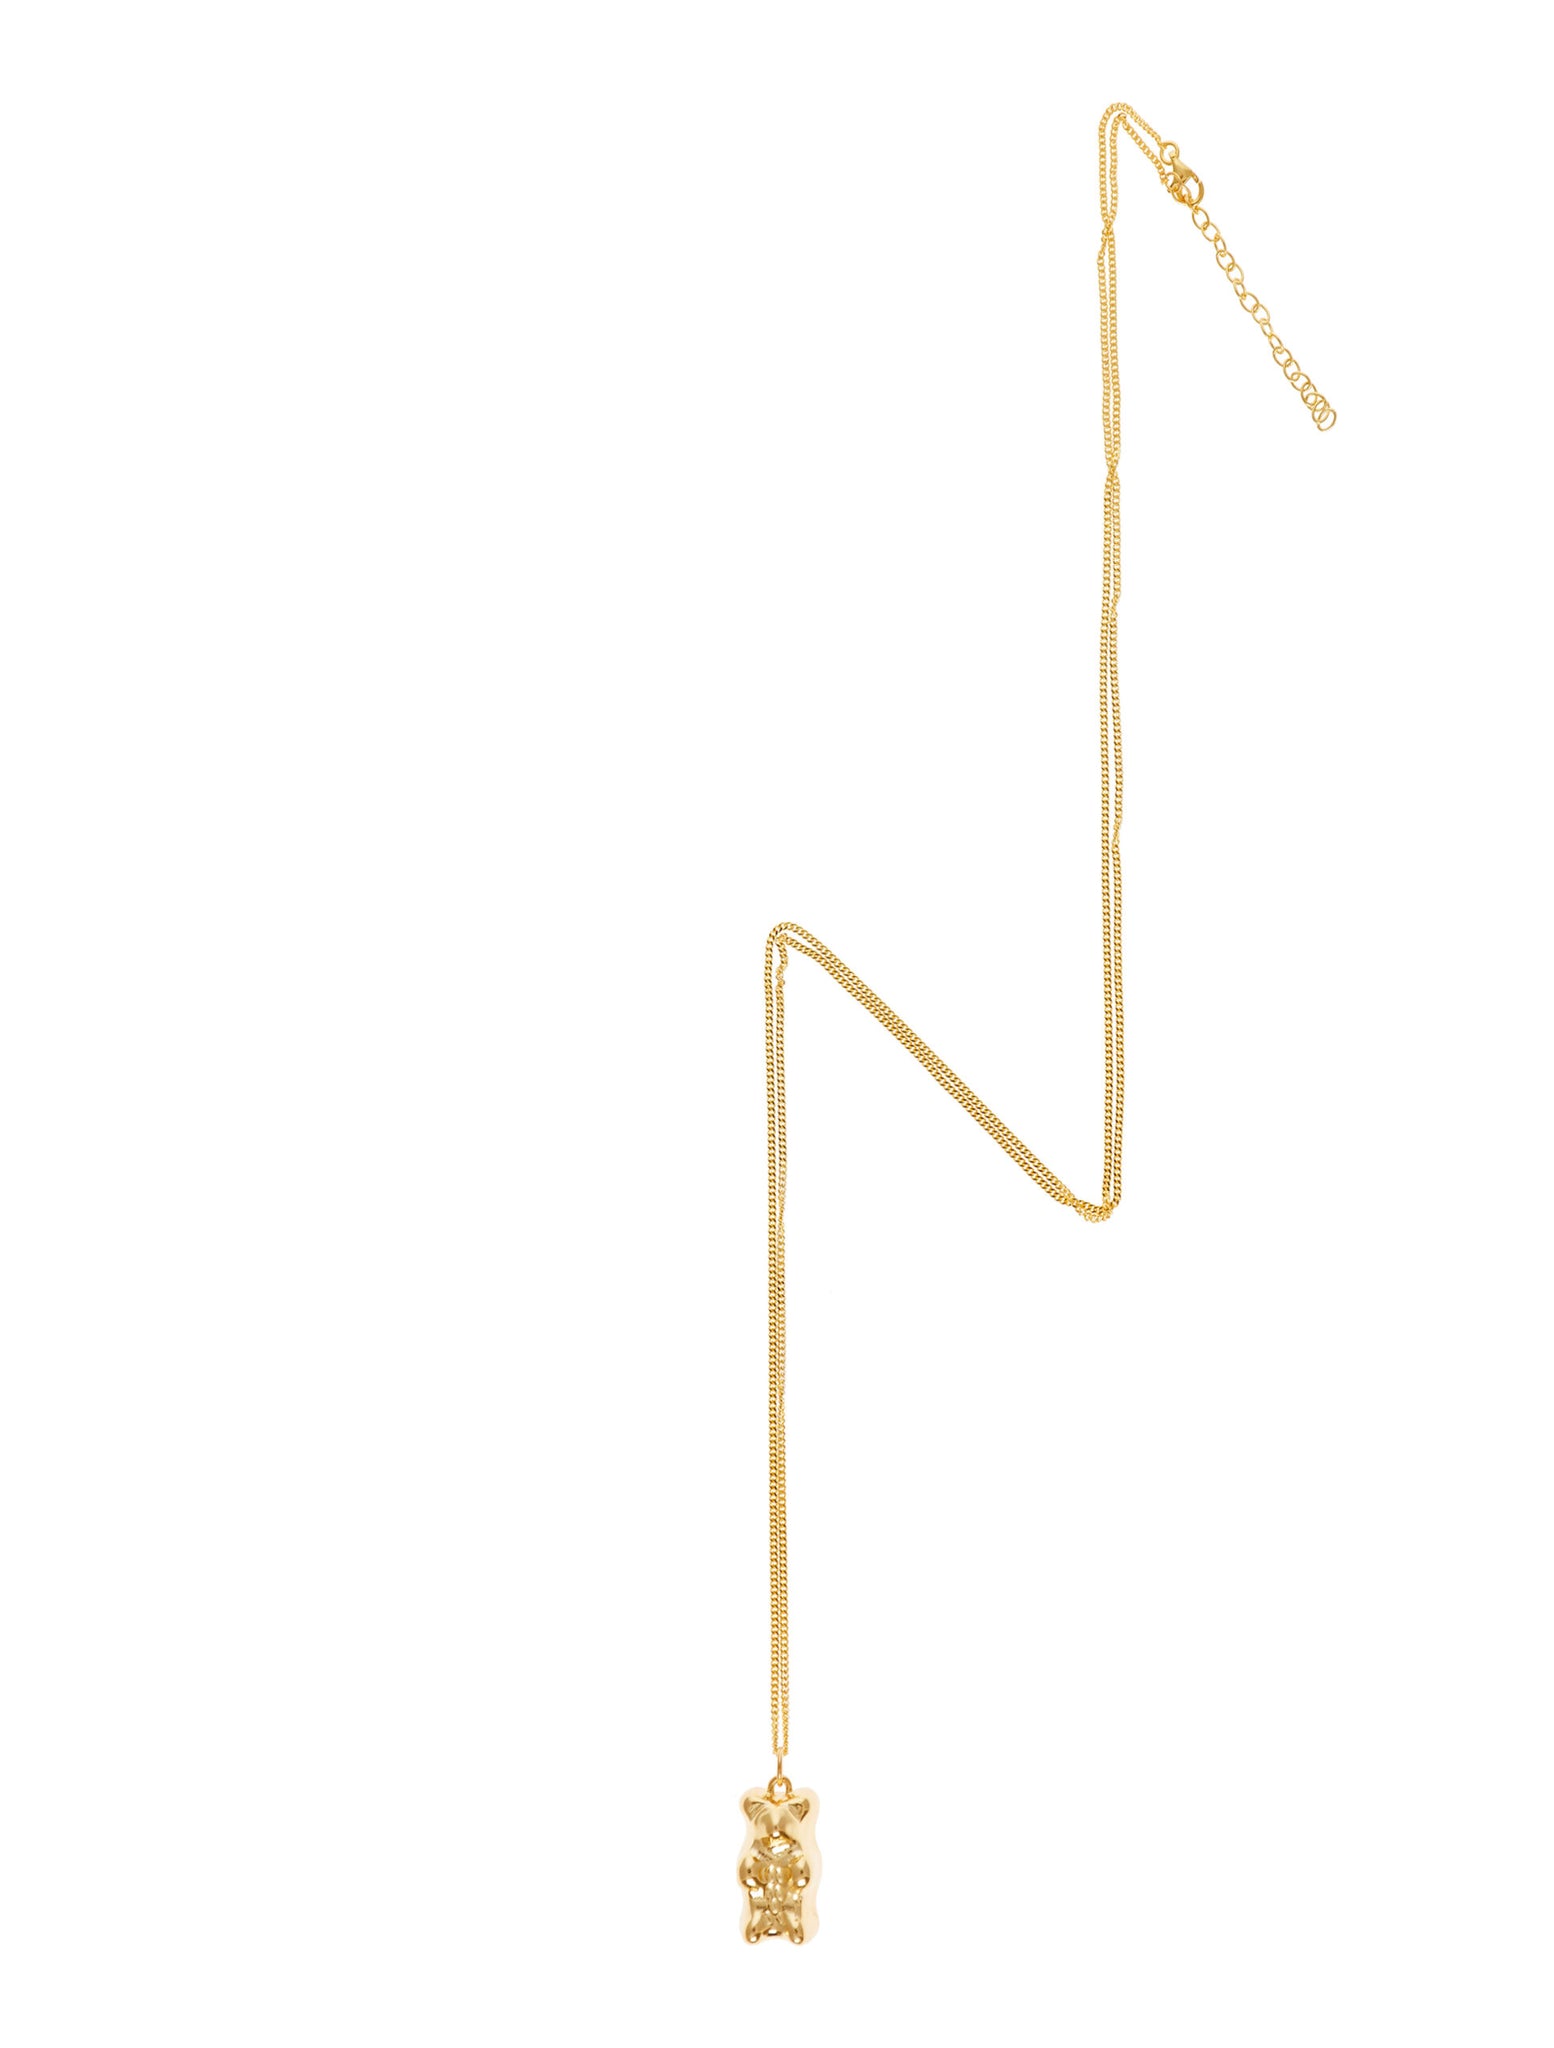 Naked gold pendant